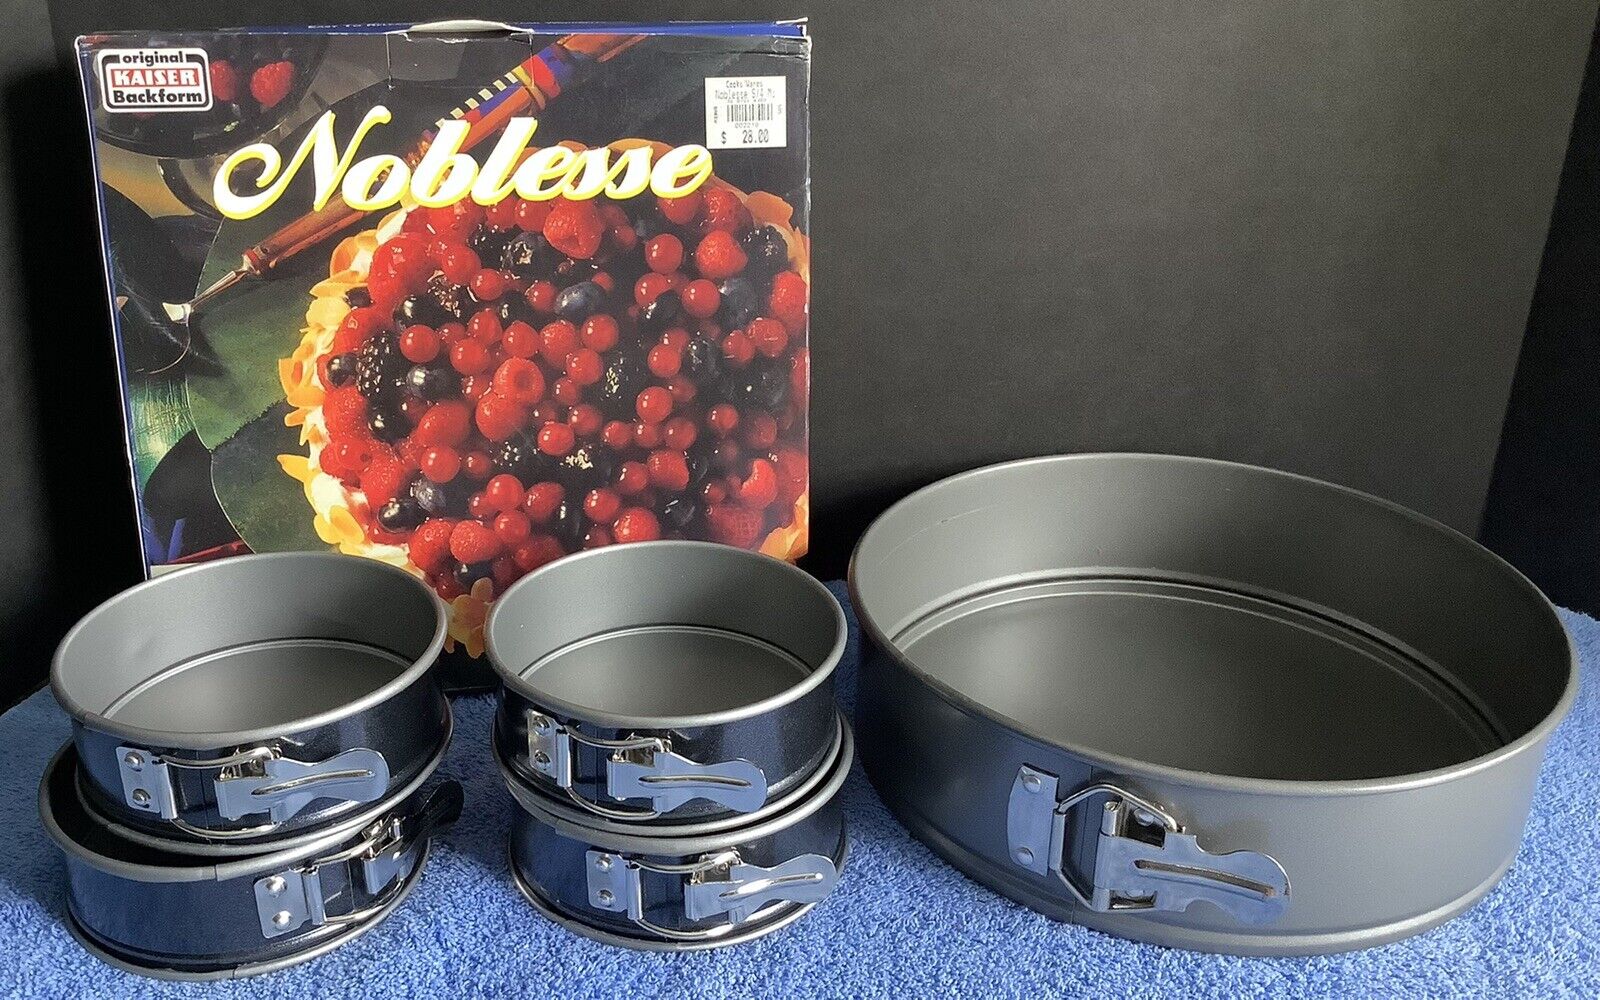 (4) New Kaiser 4 1/2” Springforms Nonstick Cake Pans In Box & (1) 10” Pan